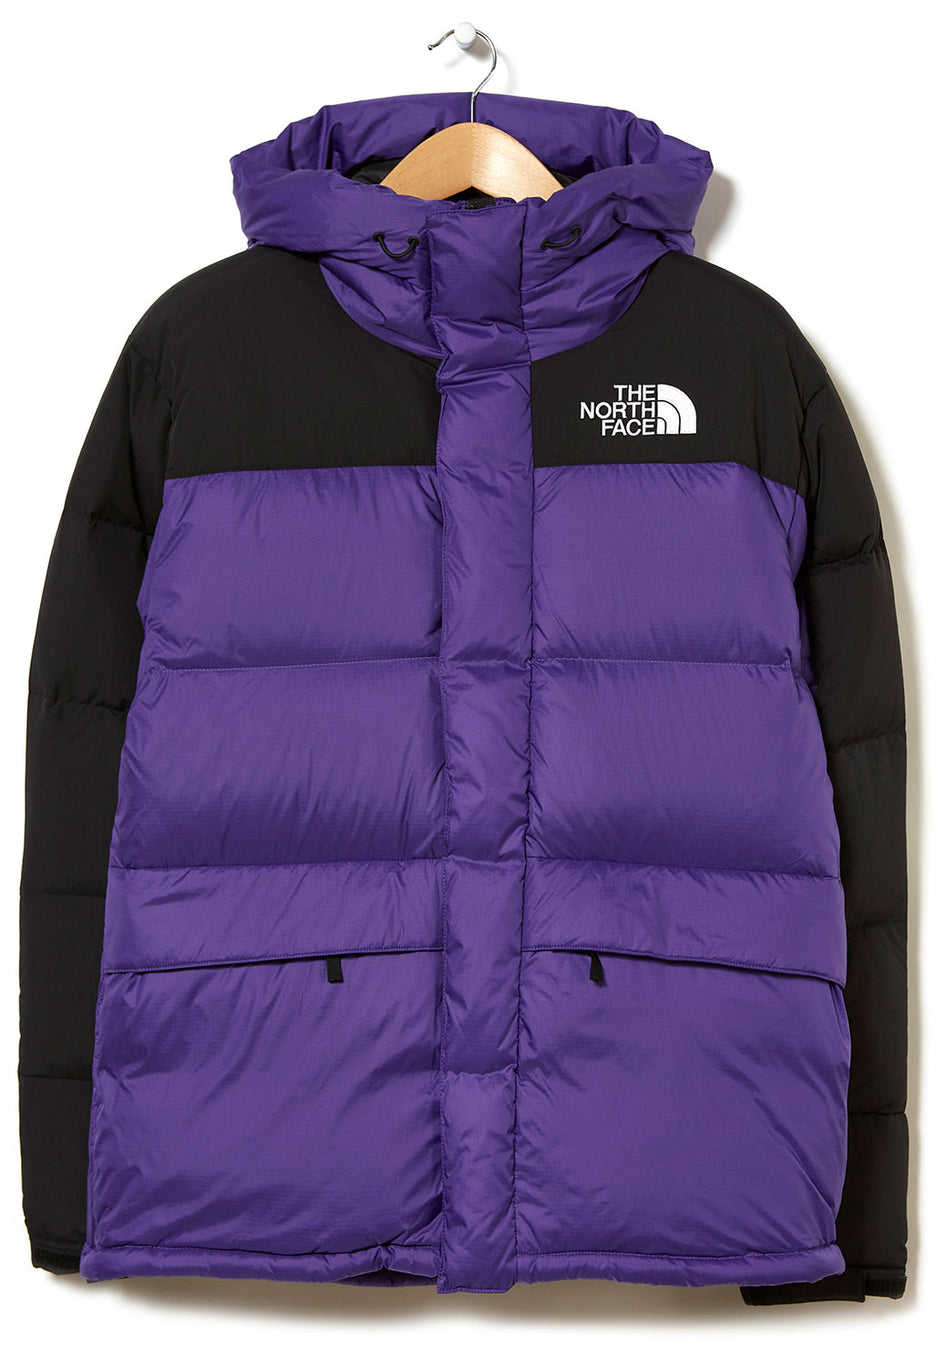 The North Face Himalayan Men's Down Parka Jacket - Peak Purple